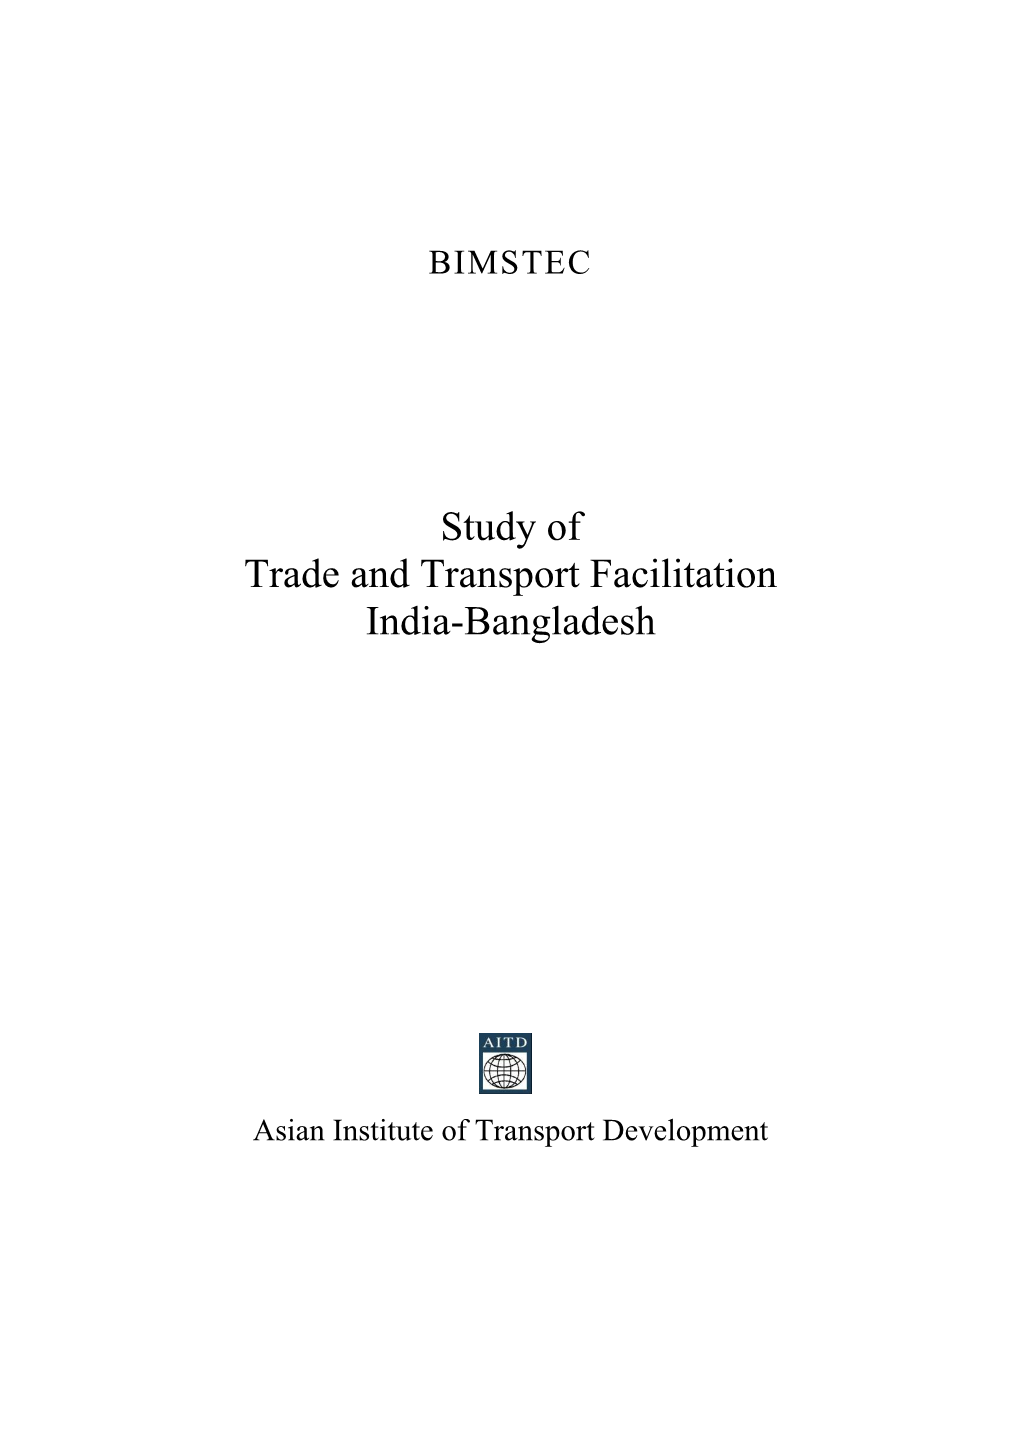 Study of Trade and Transport Facilitation: India-Bangladesh